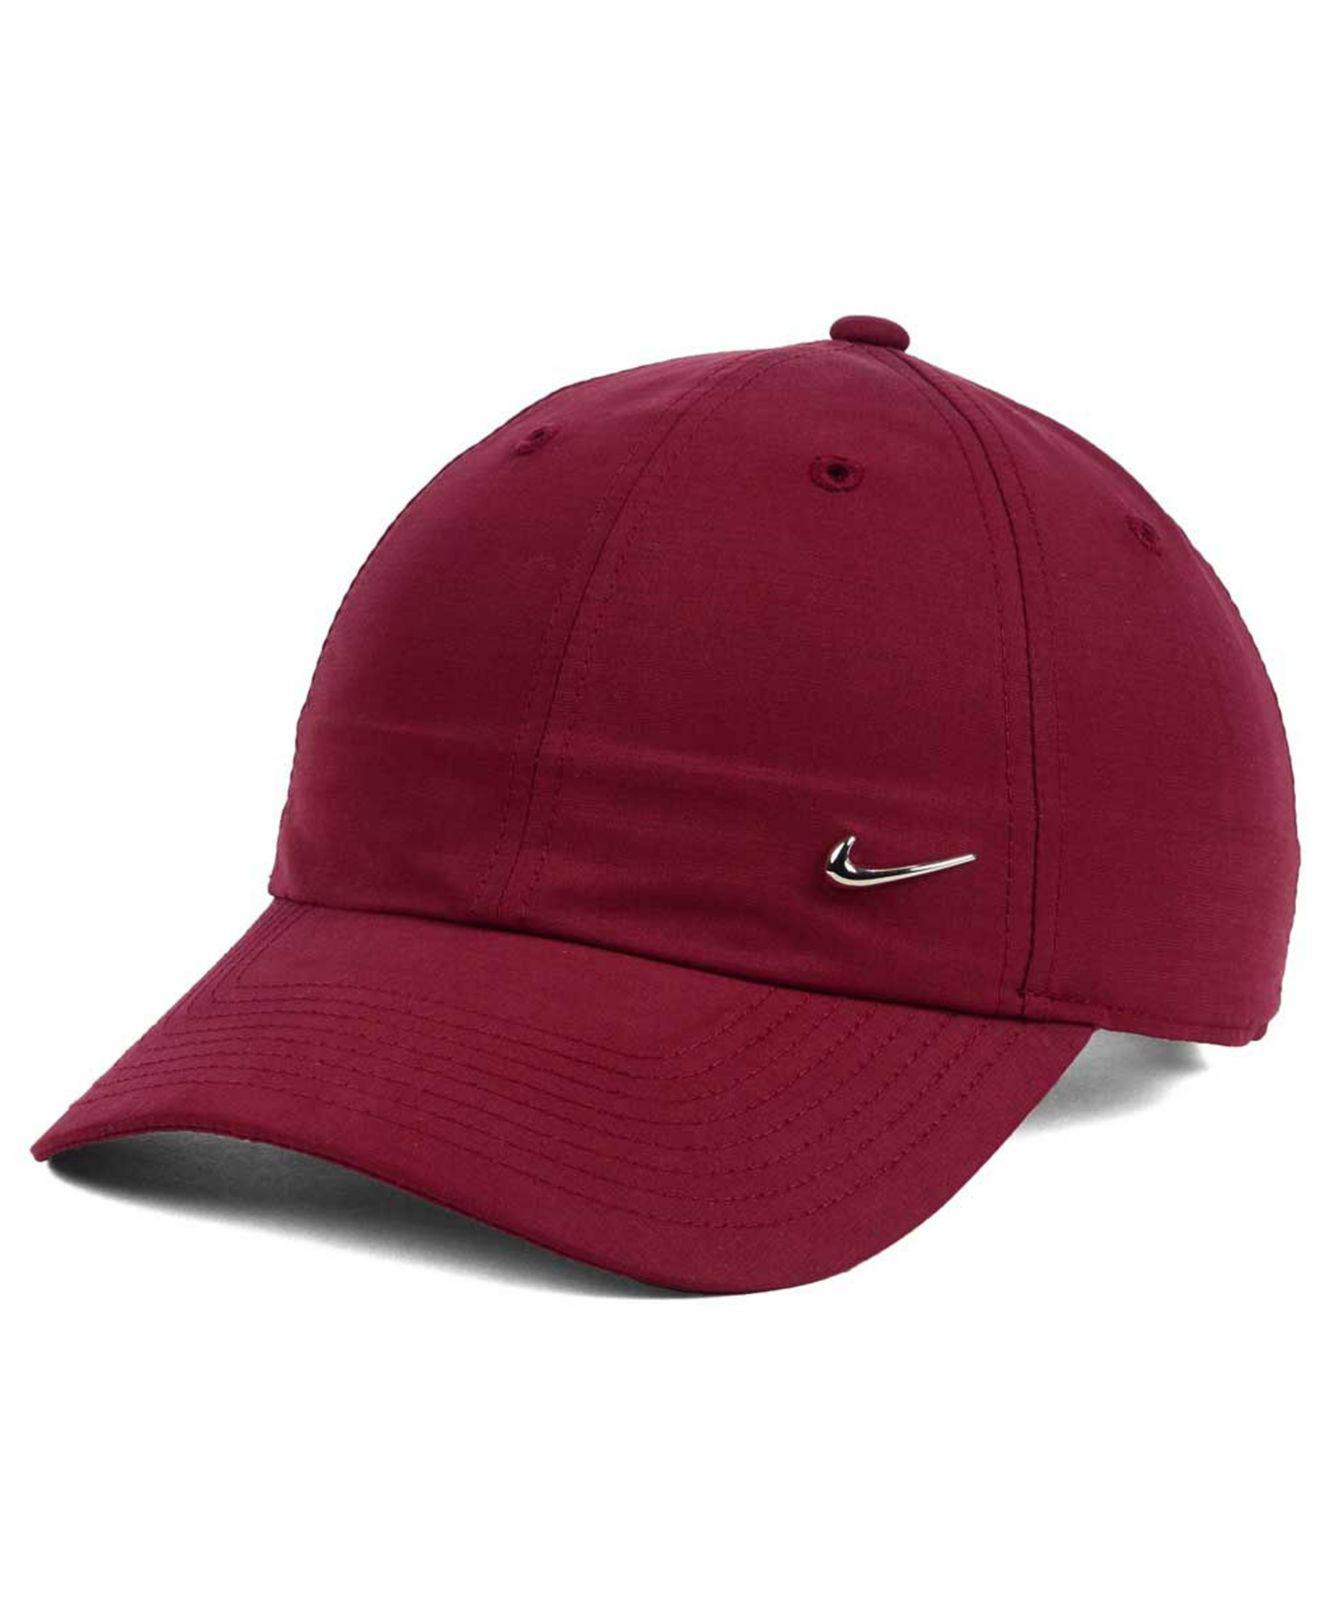 Nike Synthetic Metal Swoosh Cap in 